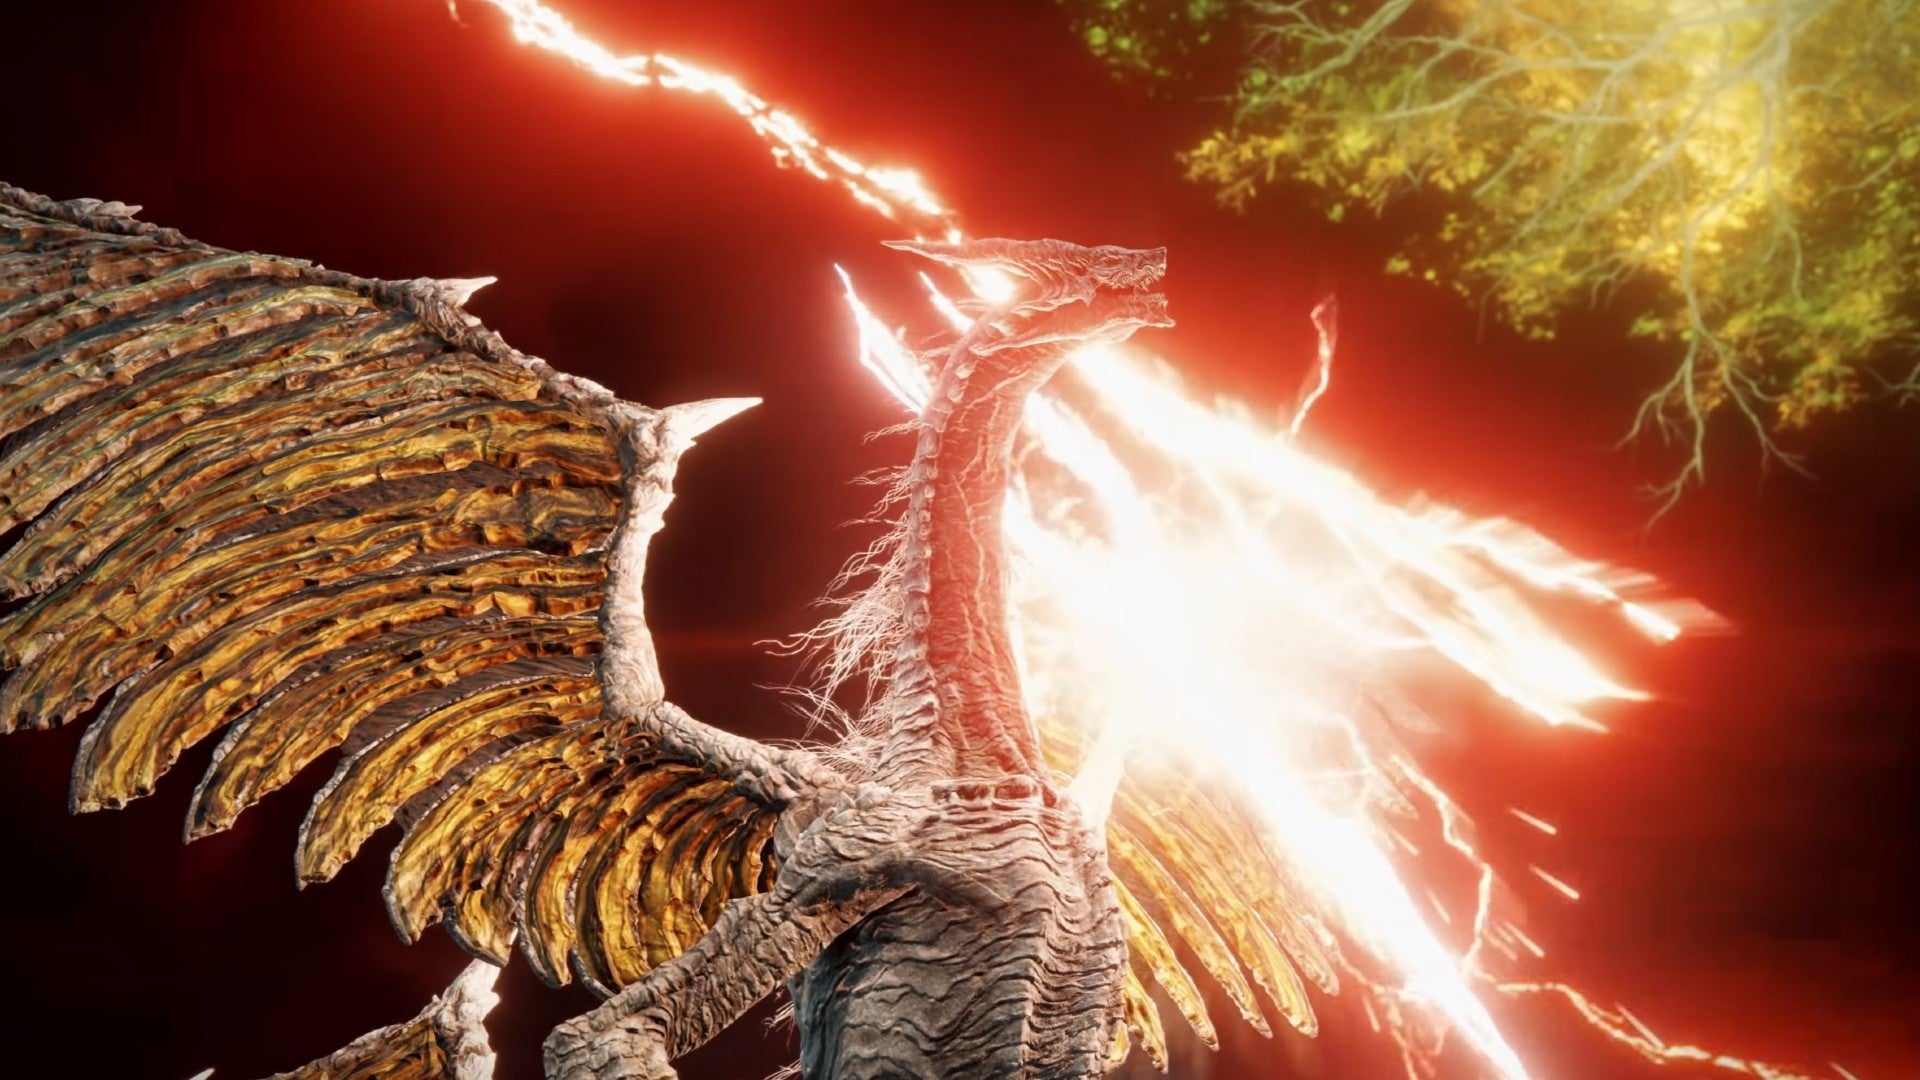 Elden Ring image showing a standing dragon holding a crackling bolt of red lightning